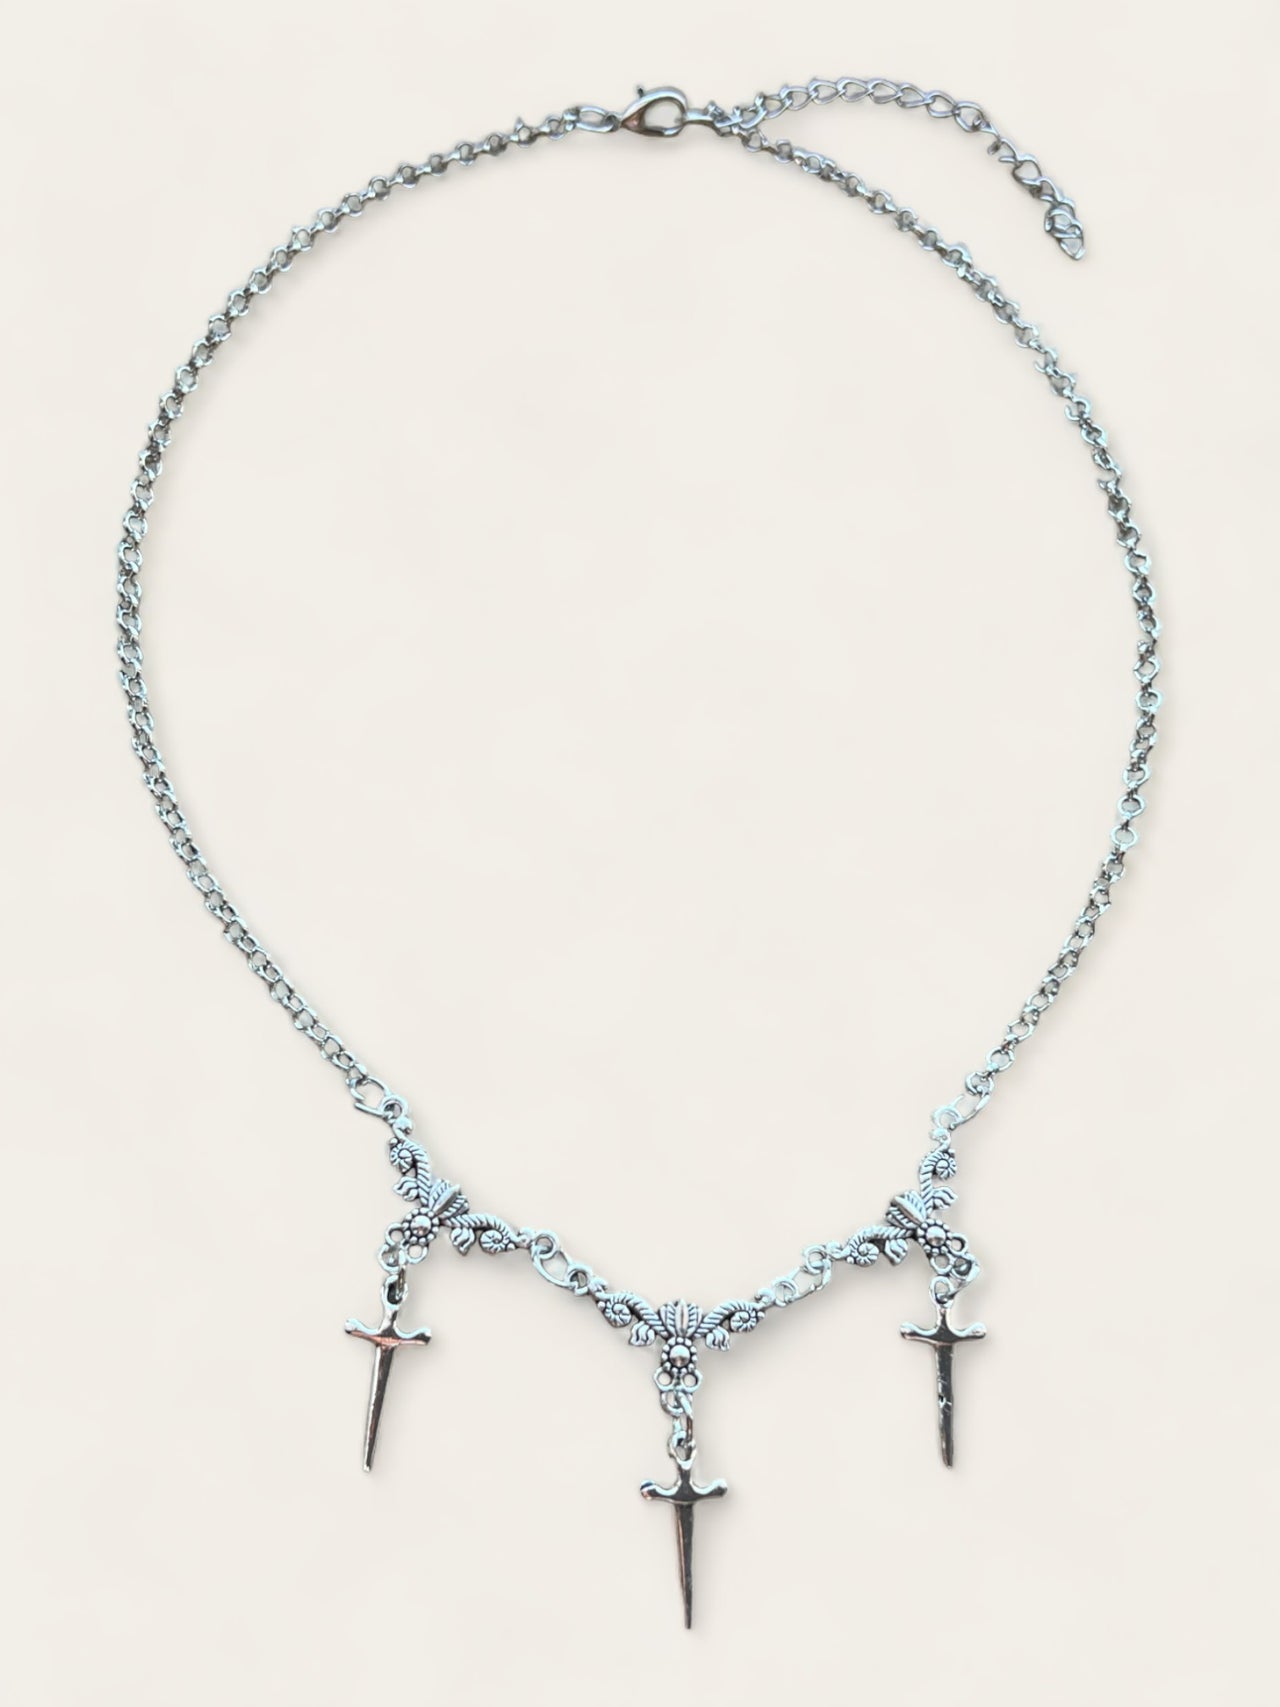 Gothic Sword Necklace